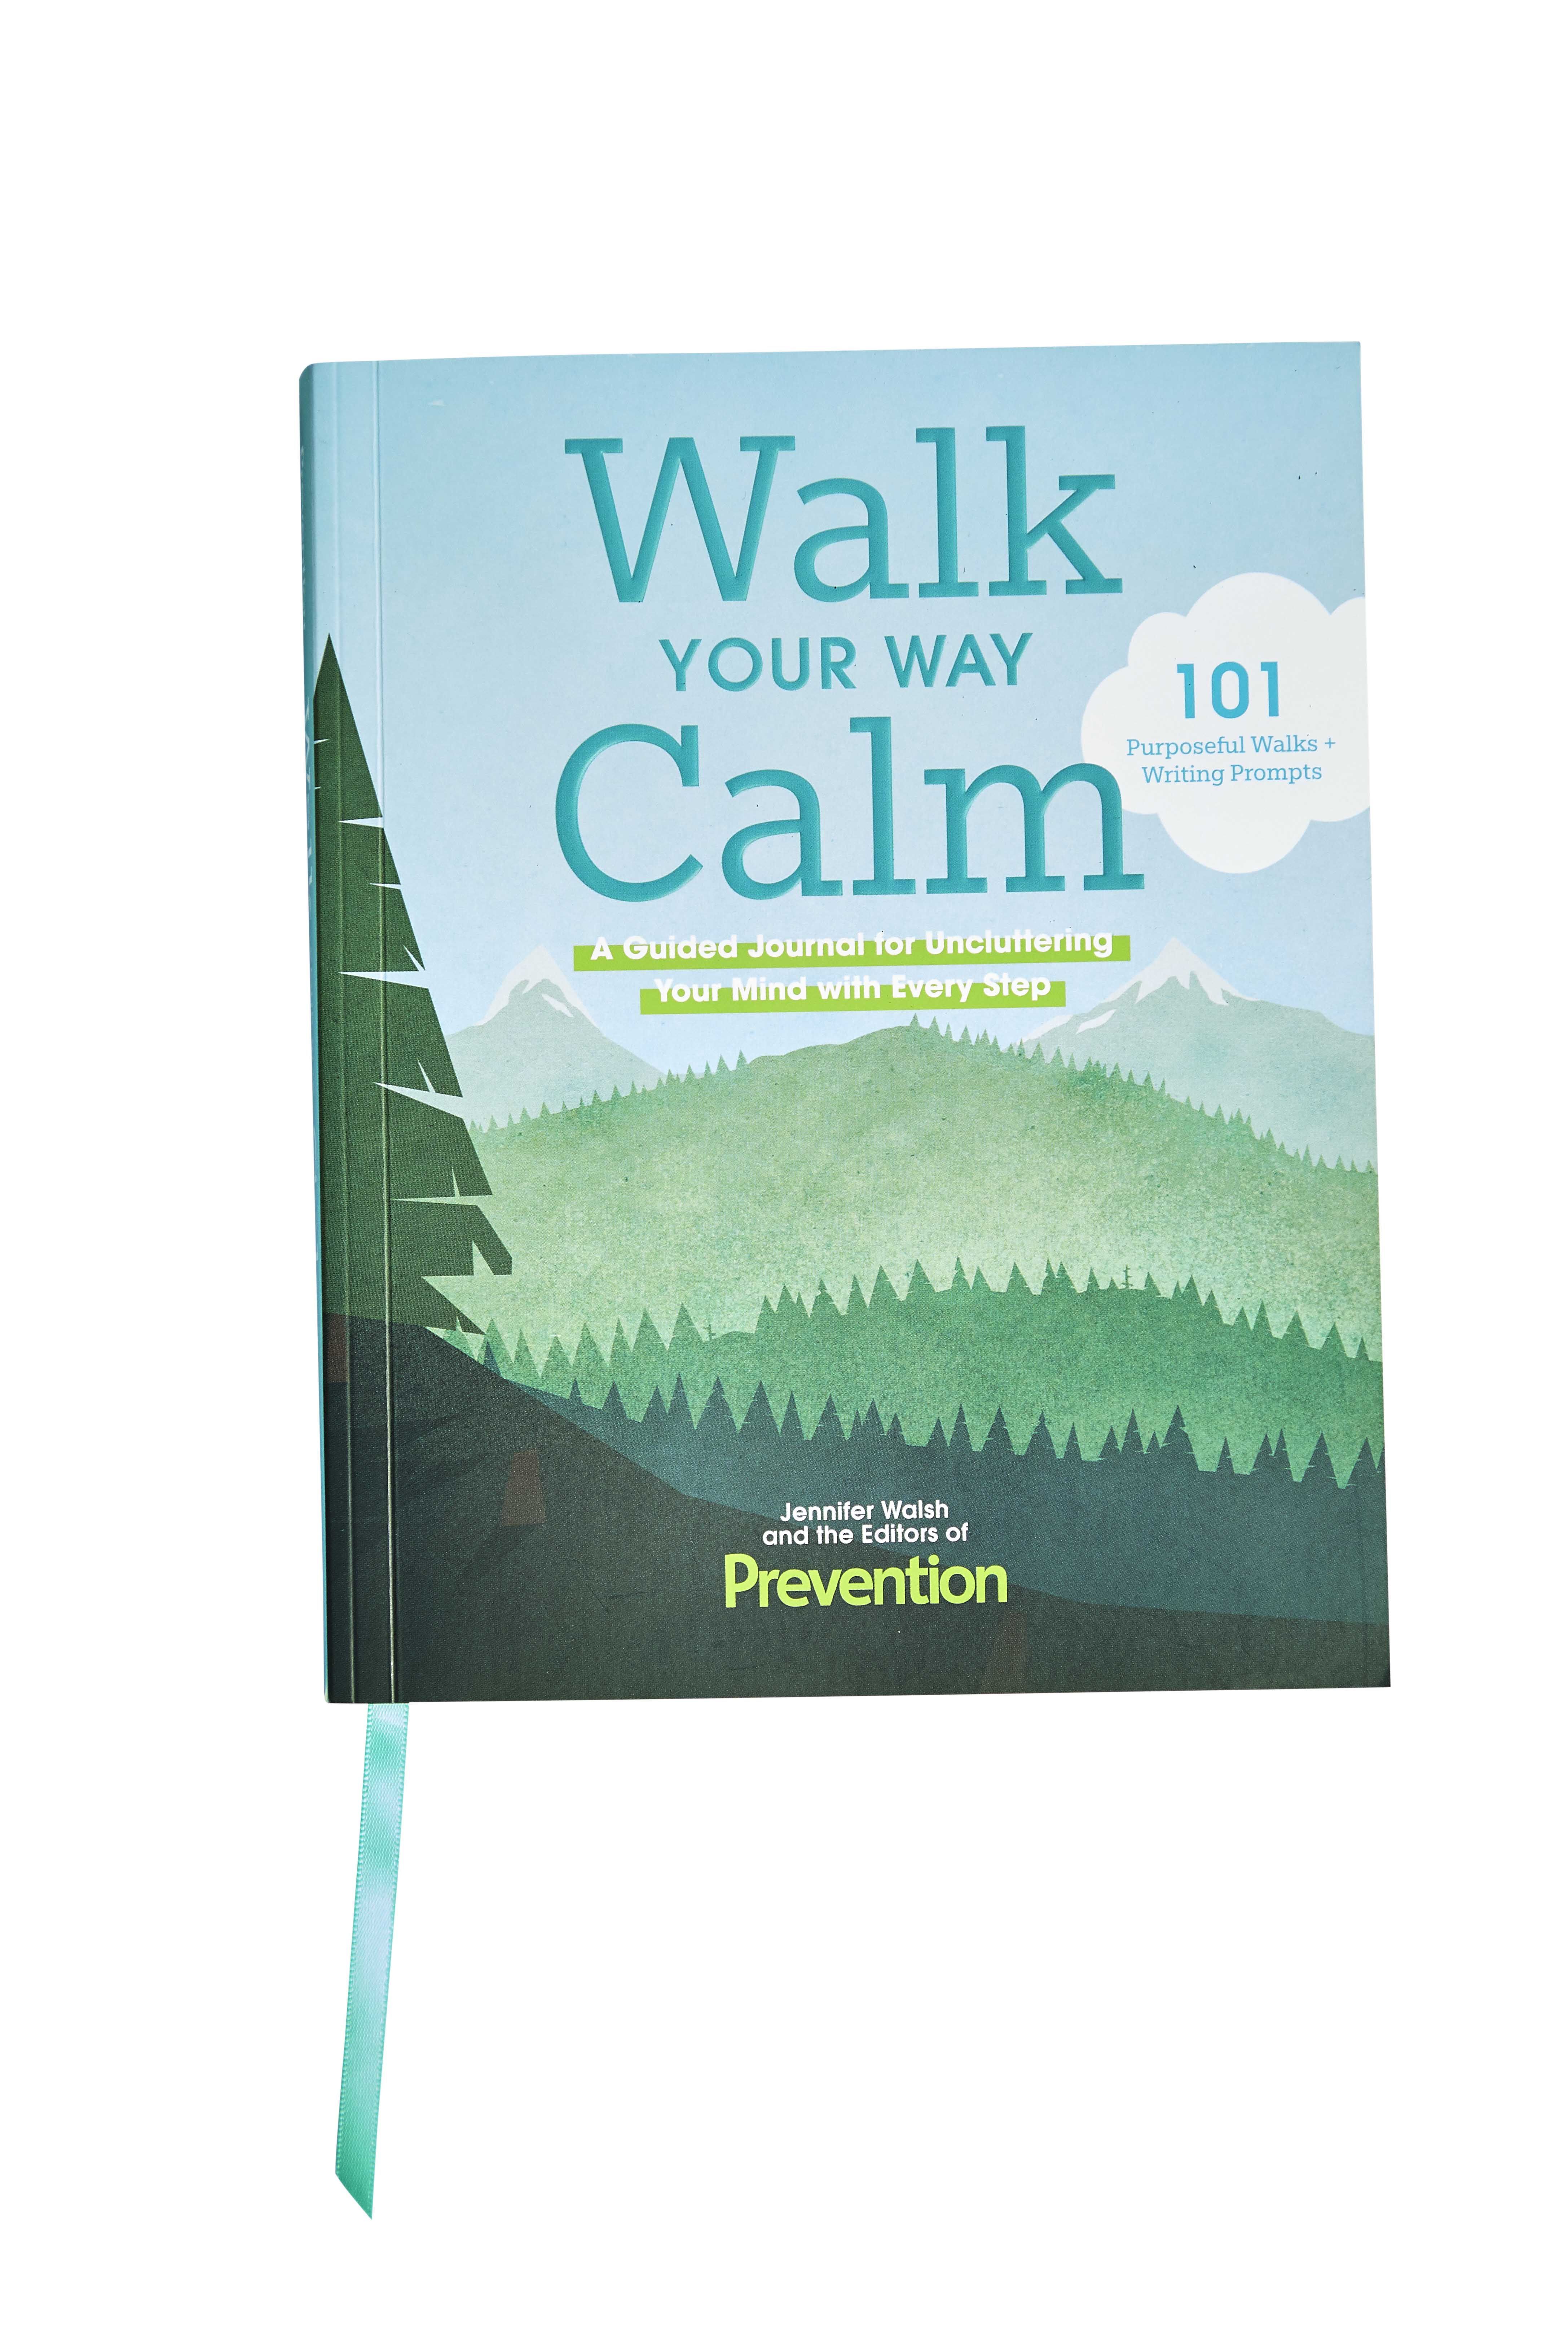 Walk Your Way Calm